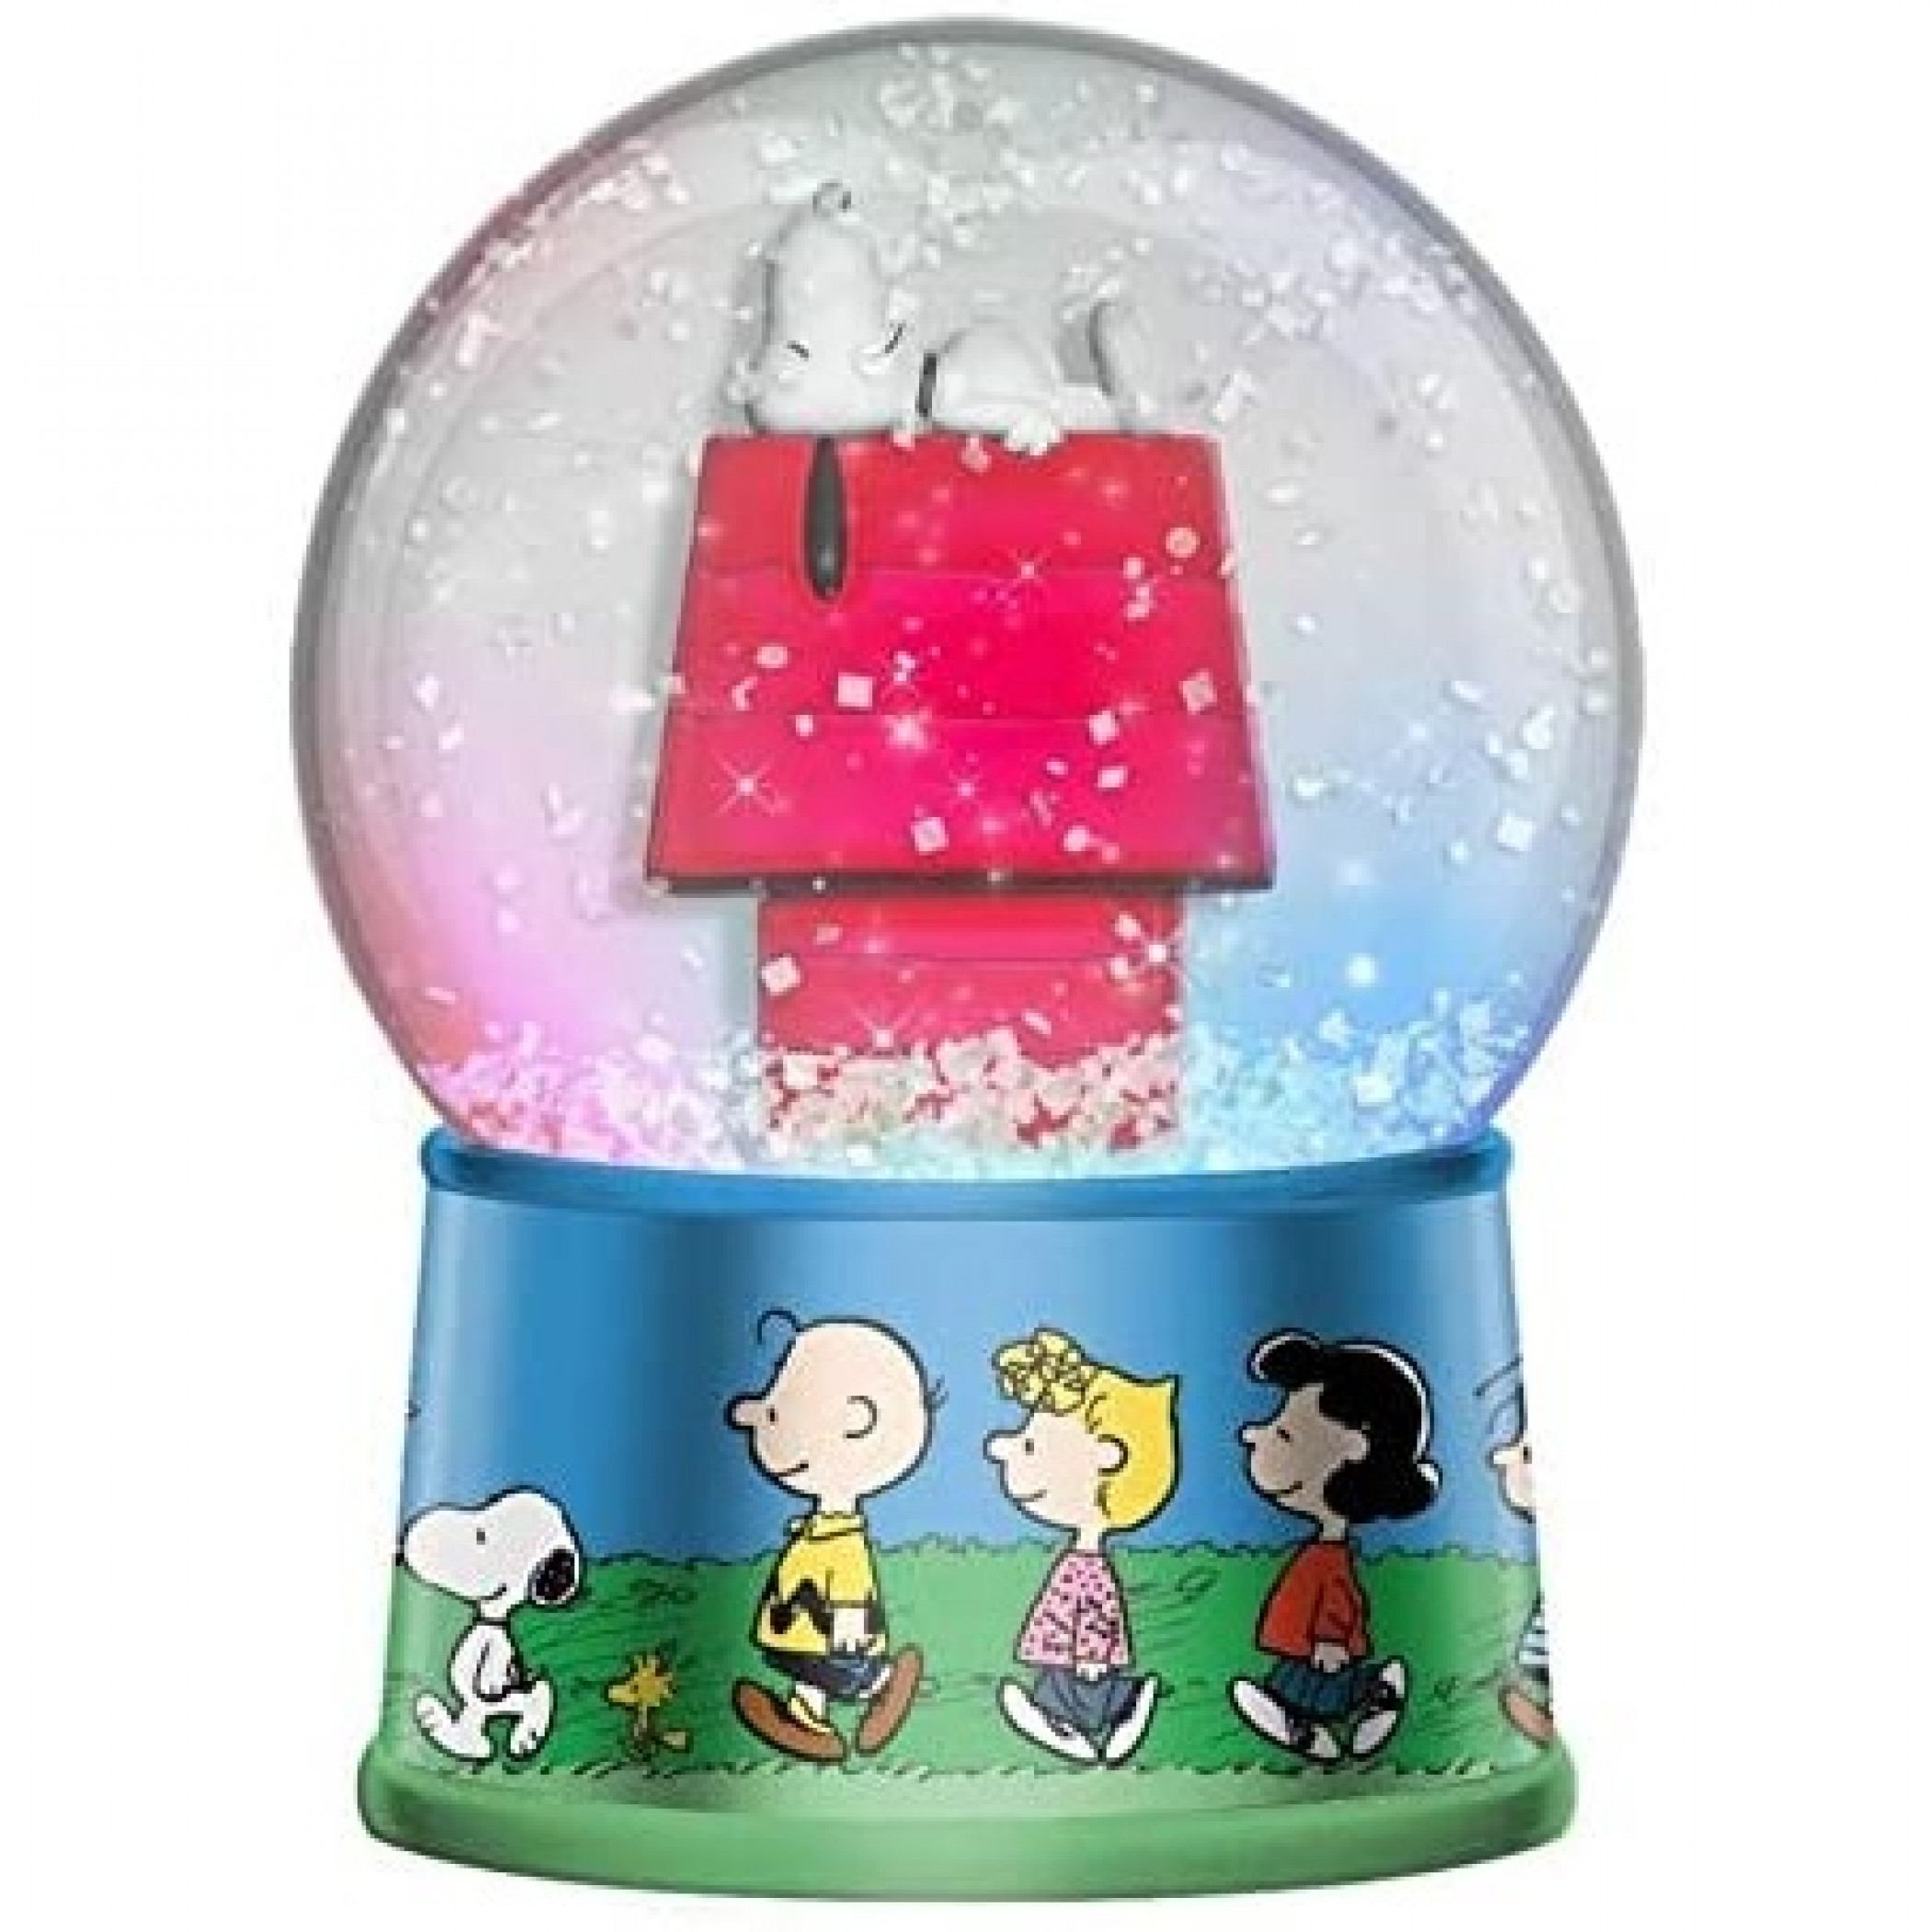 Peanuts Snoopy Light Up Snow Globe